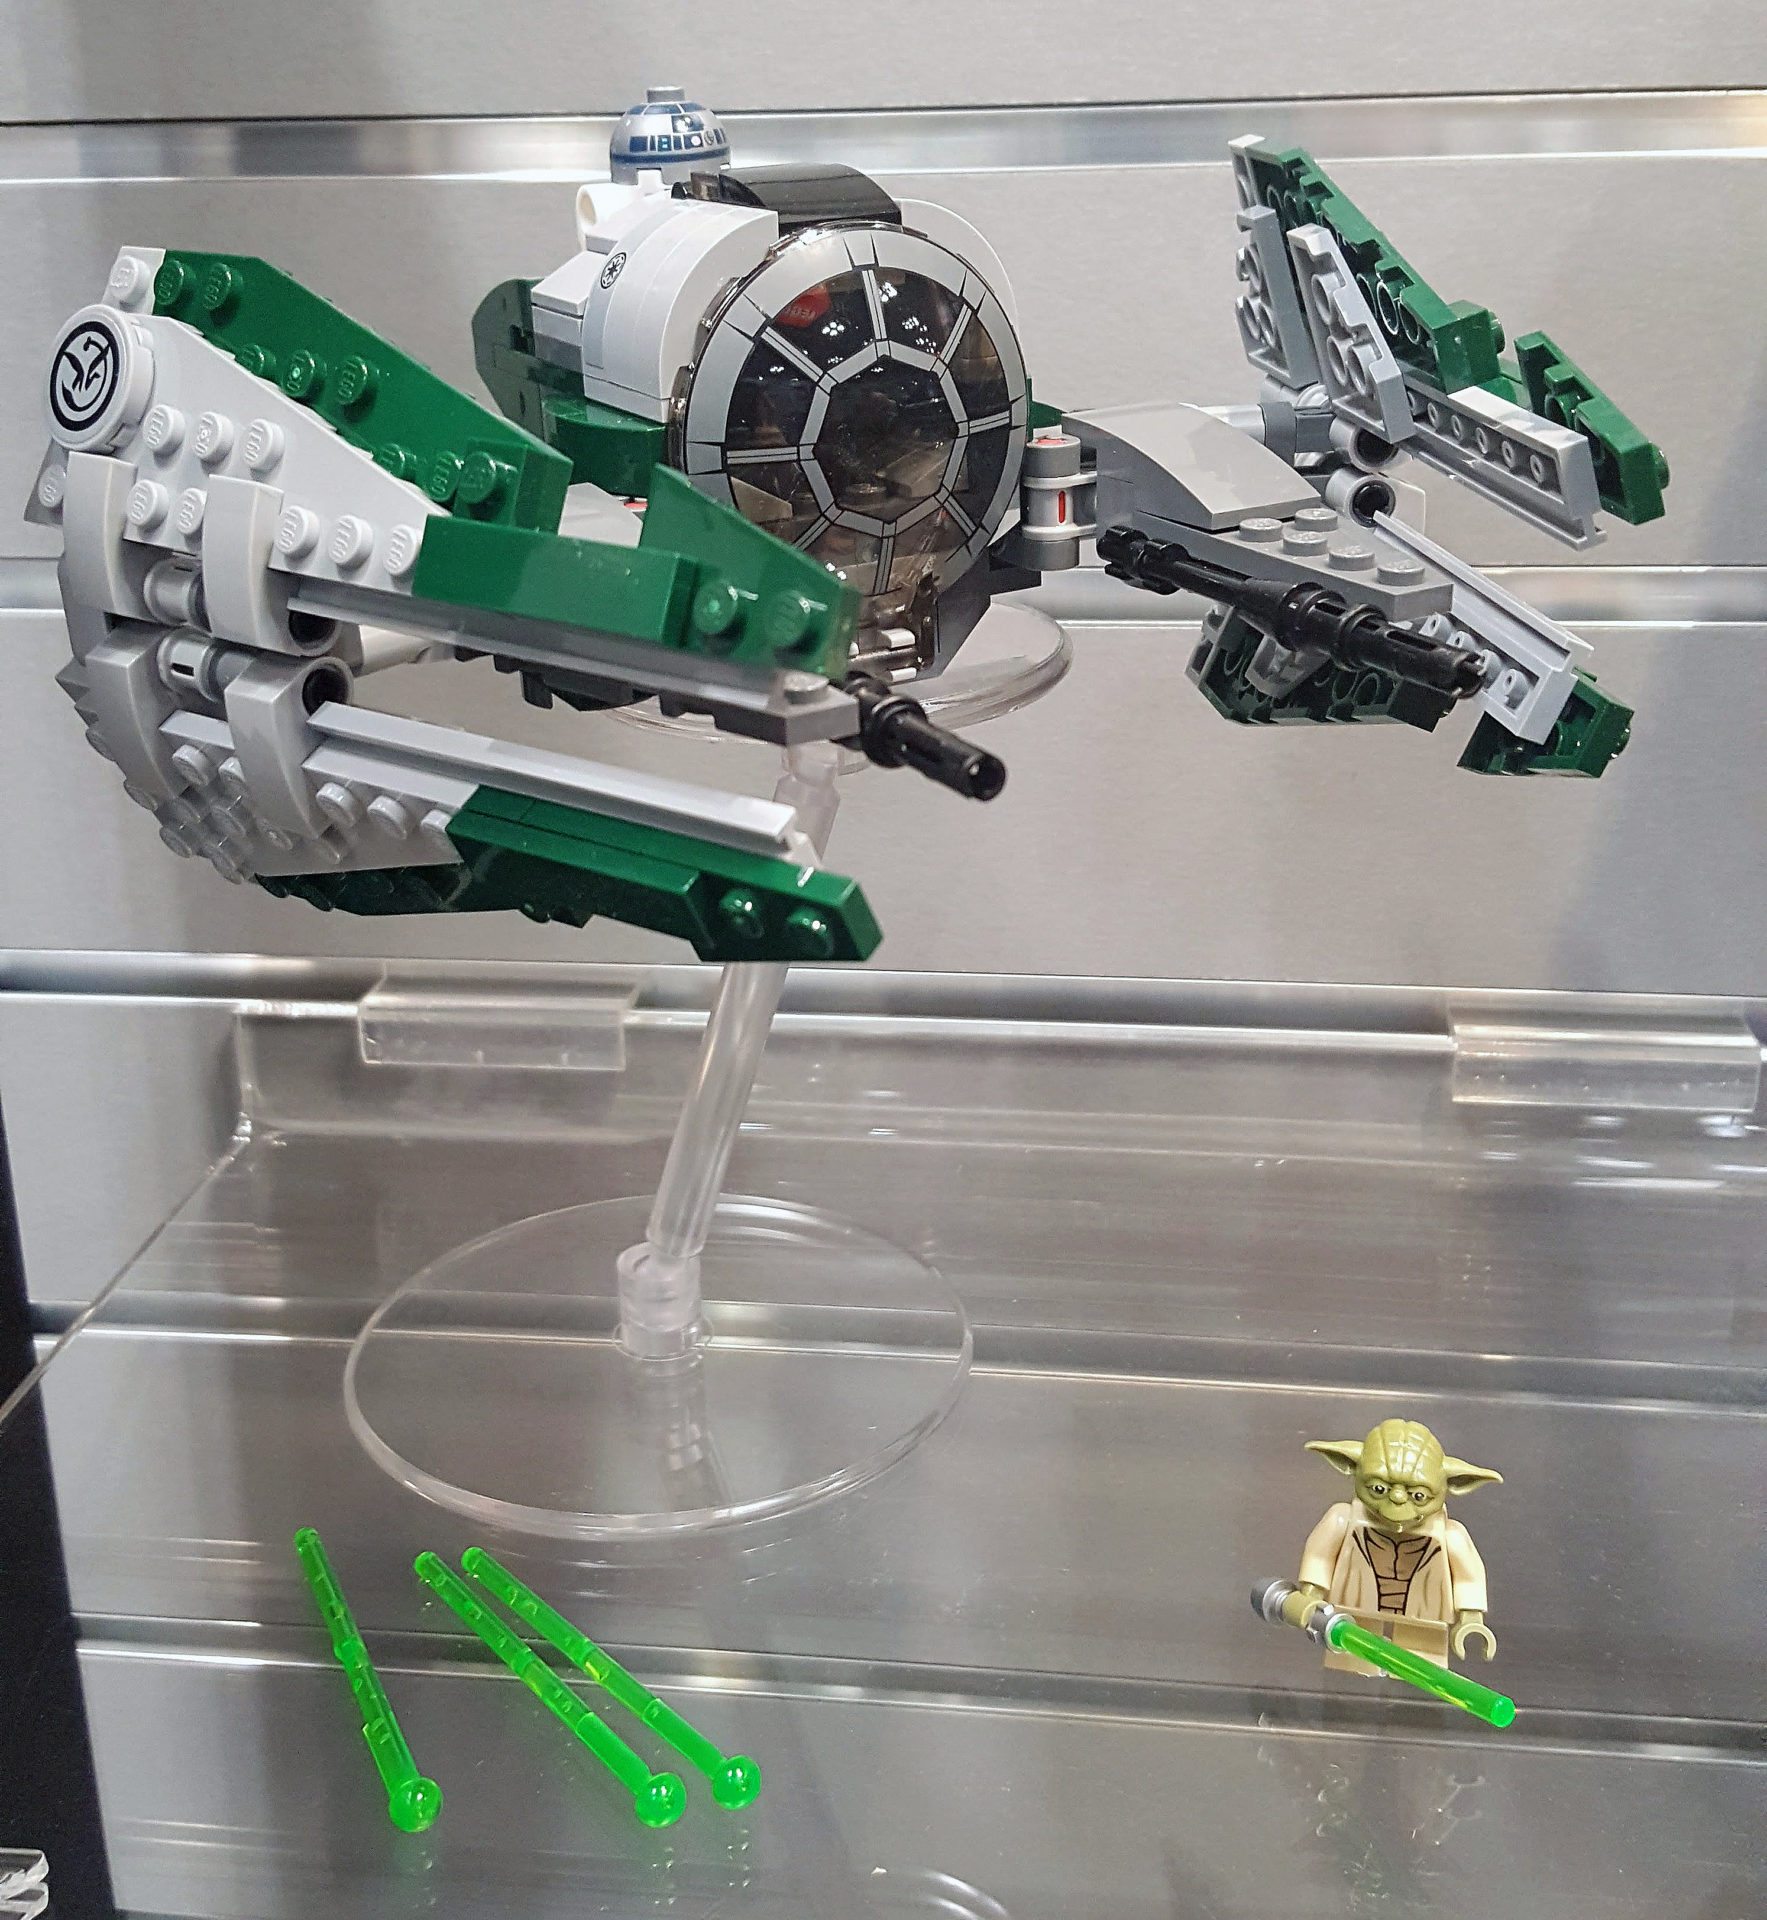 Lego Yoda's Jedi Starfighter